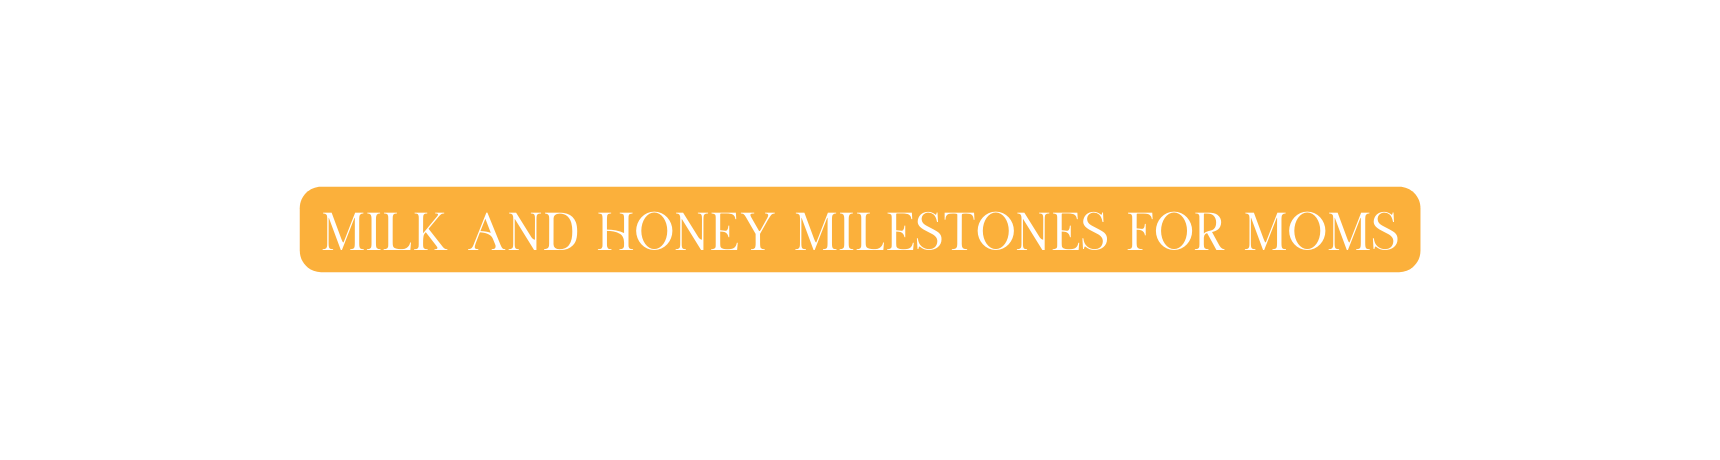 Milk and honey milestones for moms